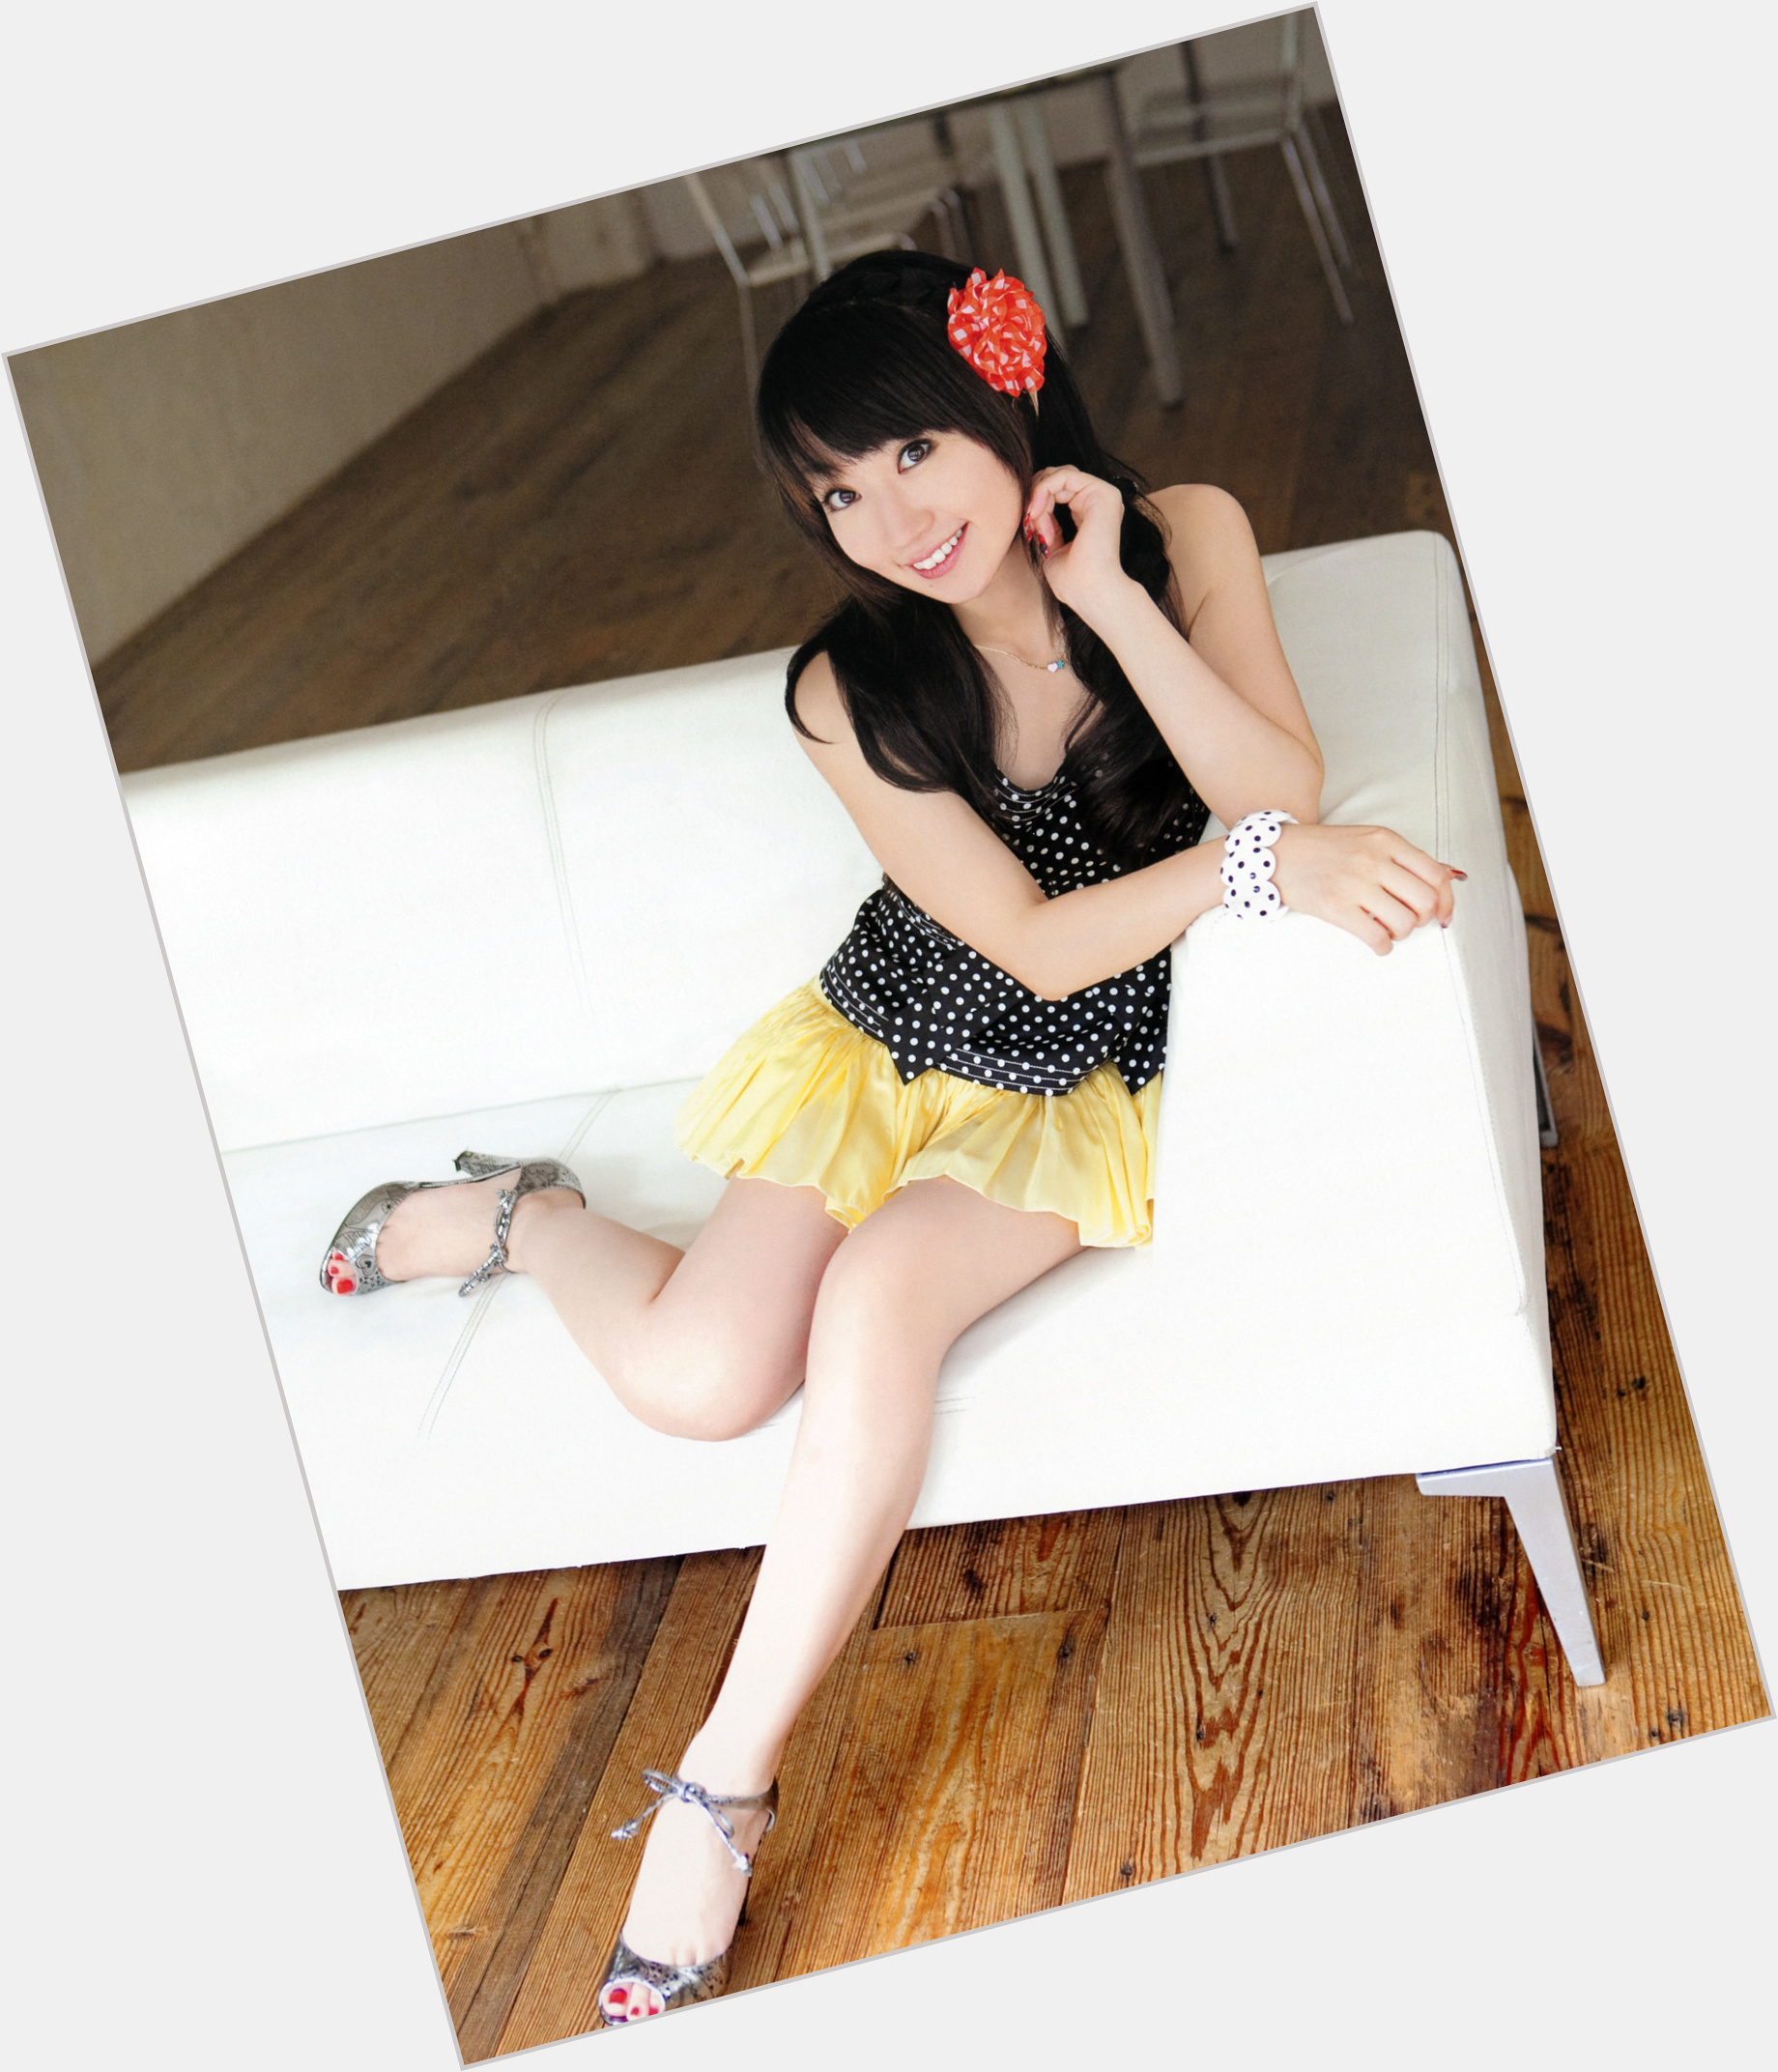 <a href="/hot-women/nana-mizuki/where-dating-news-photos">Nana Mizuki</a>  